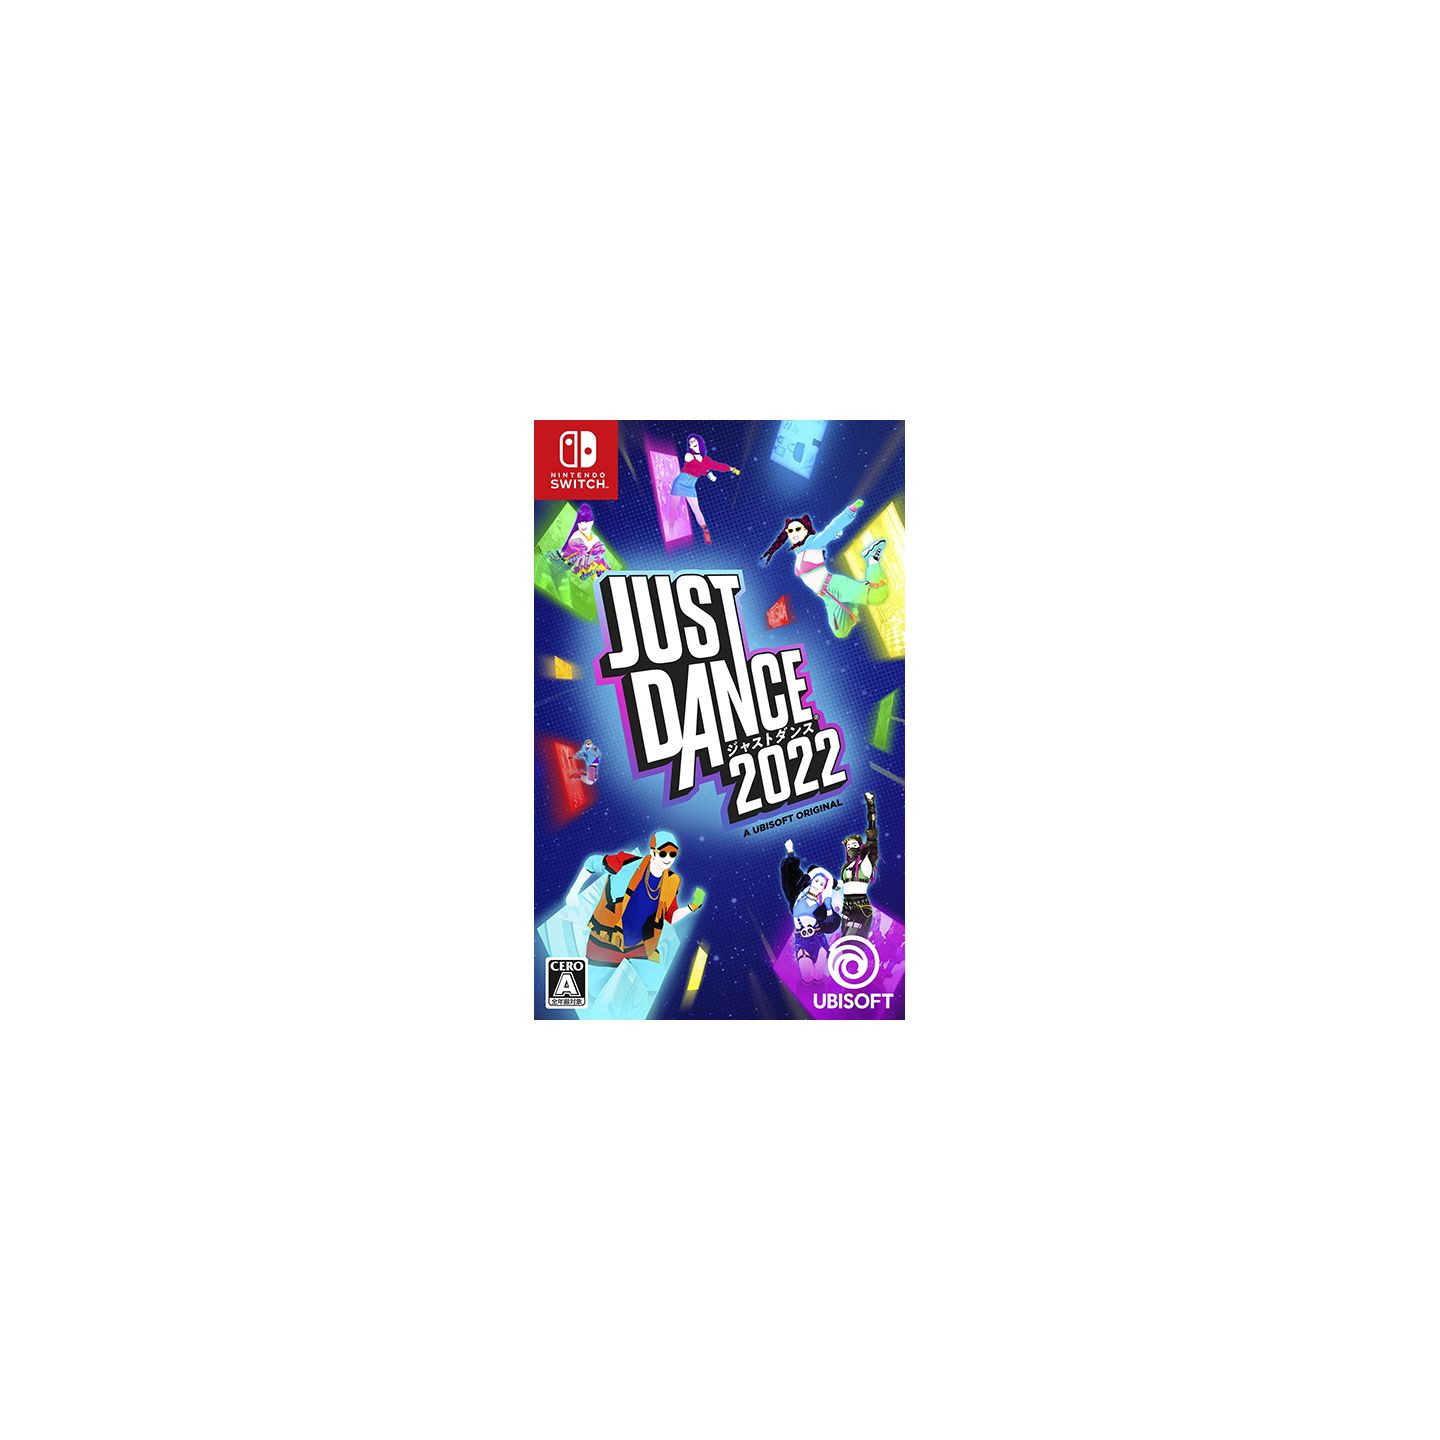 Dance 2022 Nintendo UBISOFT Switch - Just for